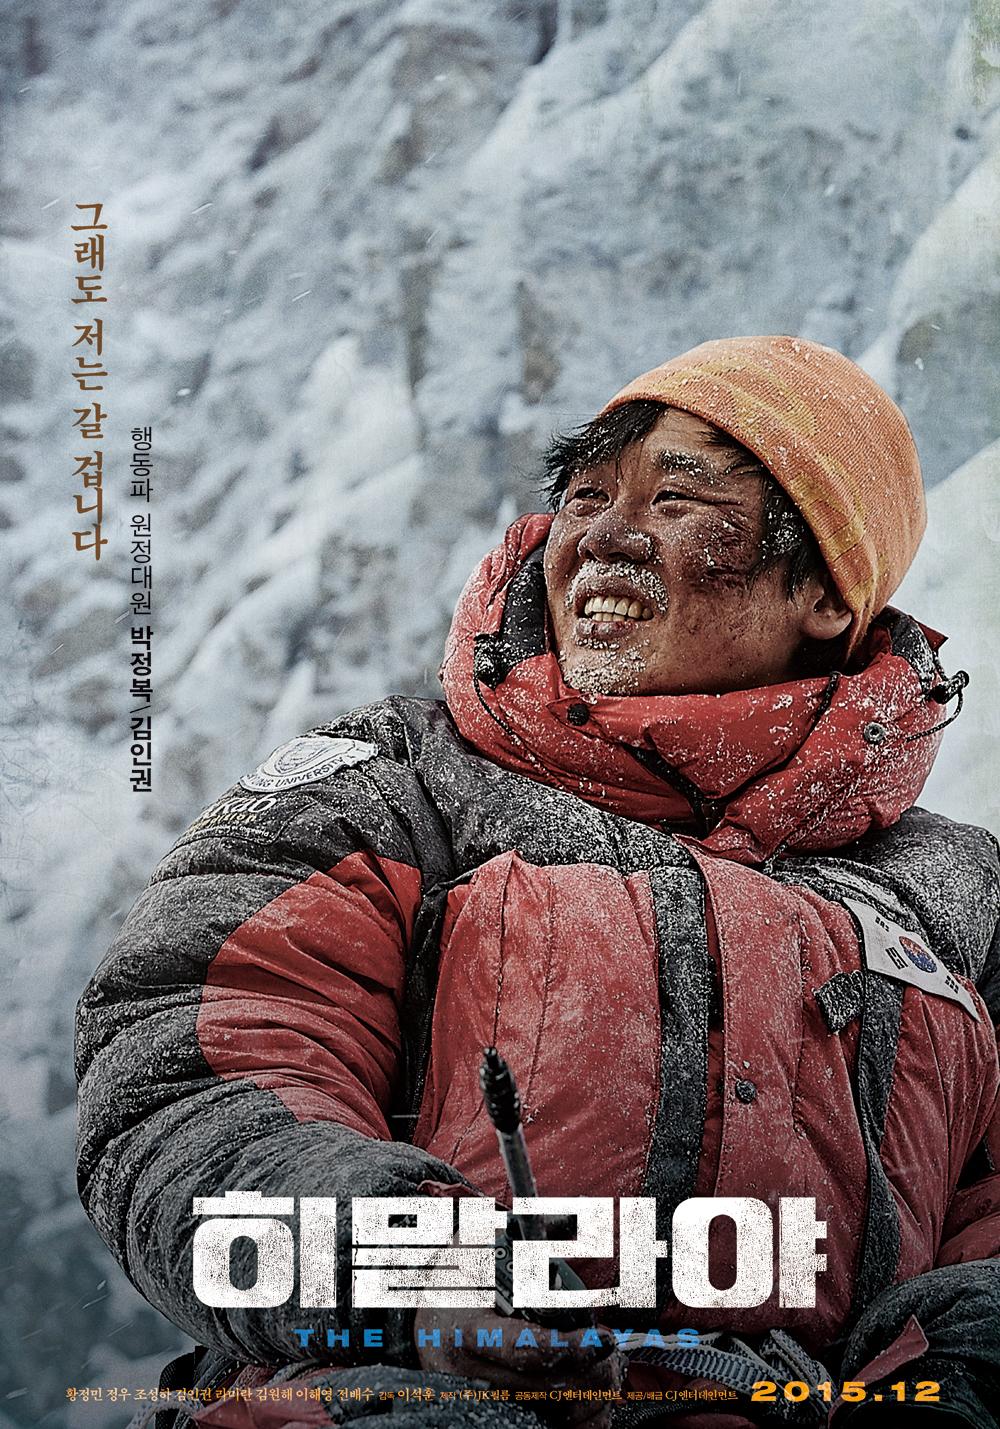 Постер фильма Гималаи | Himalaya